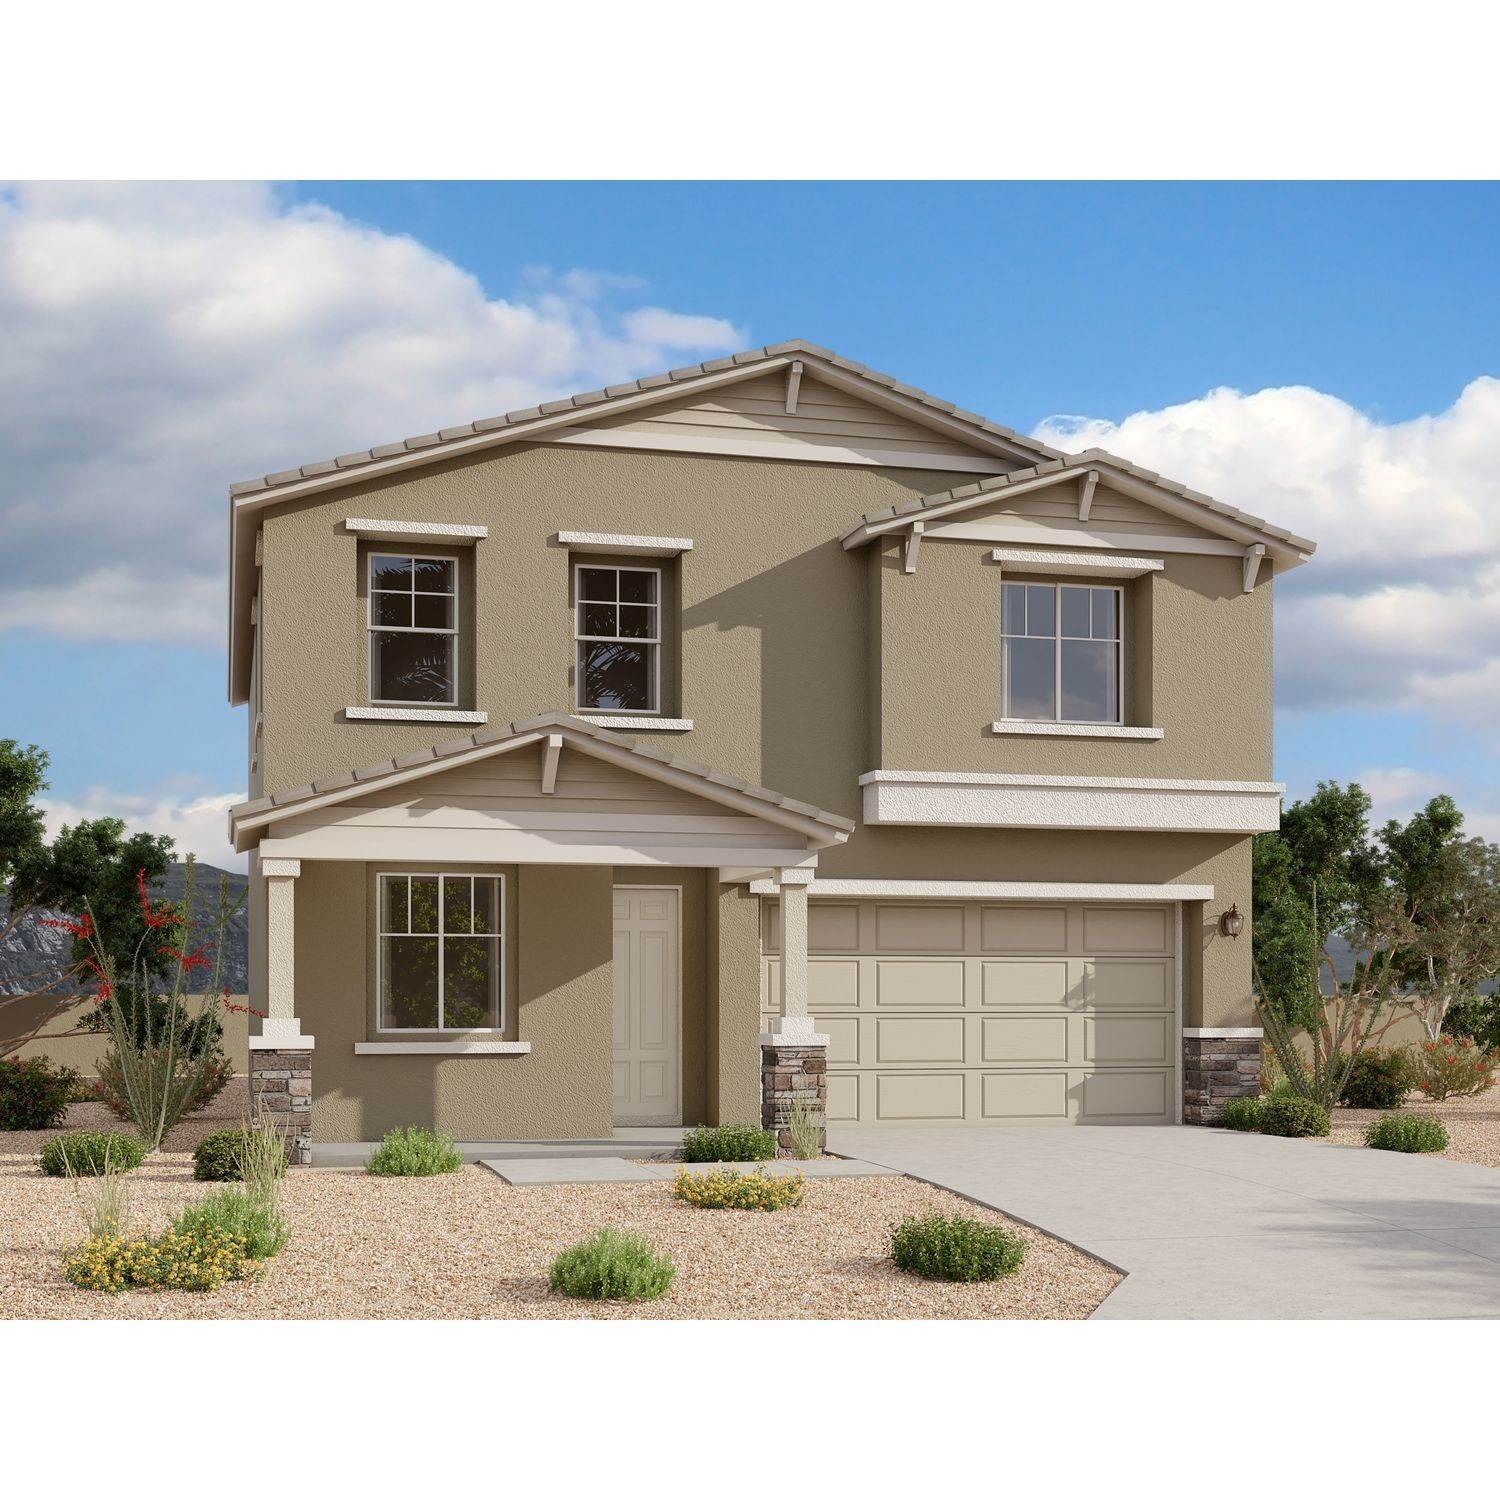 5. Single Family for Sale at Eastmark 9619 E Solina Ave, Mesa, AZ 85212